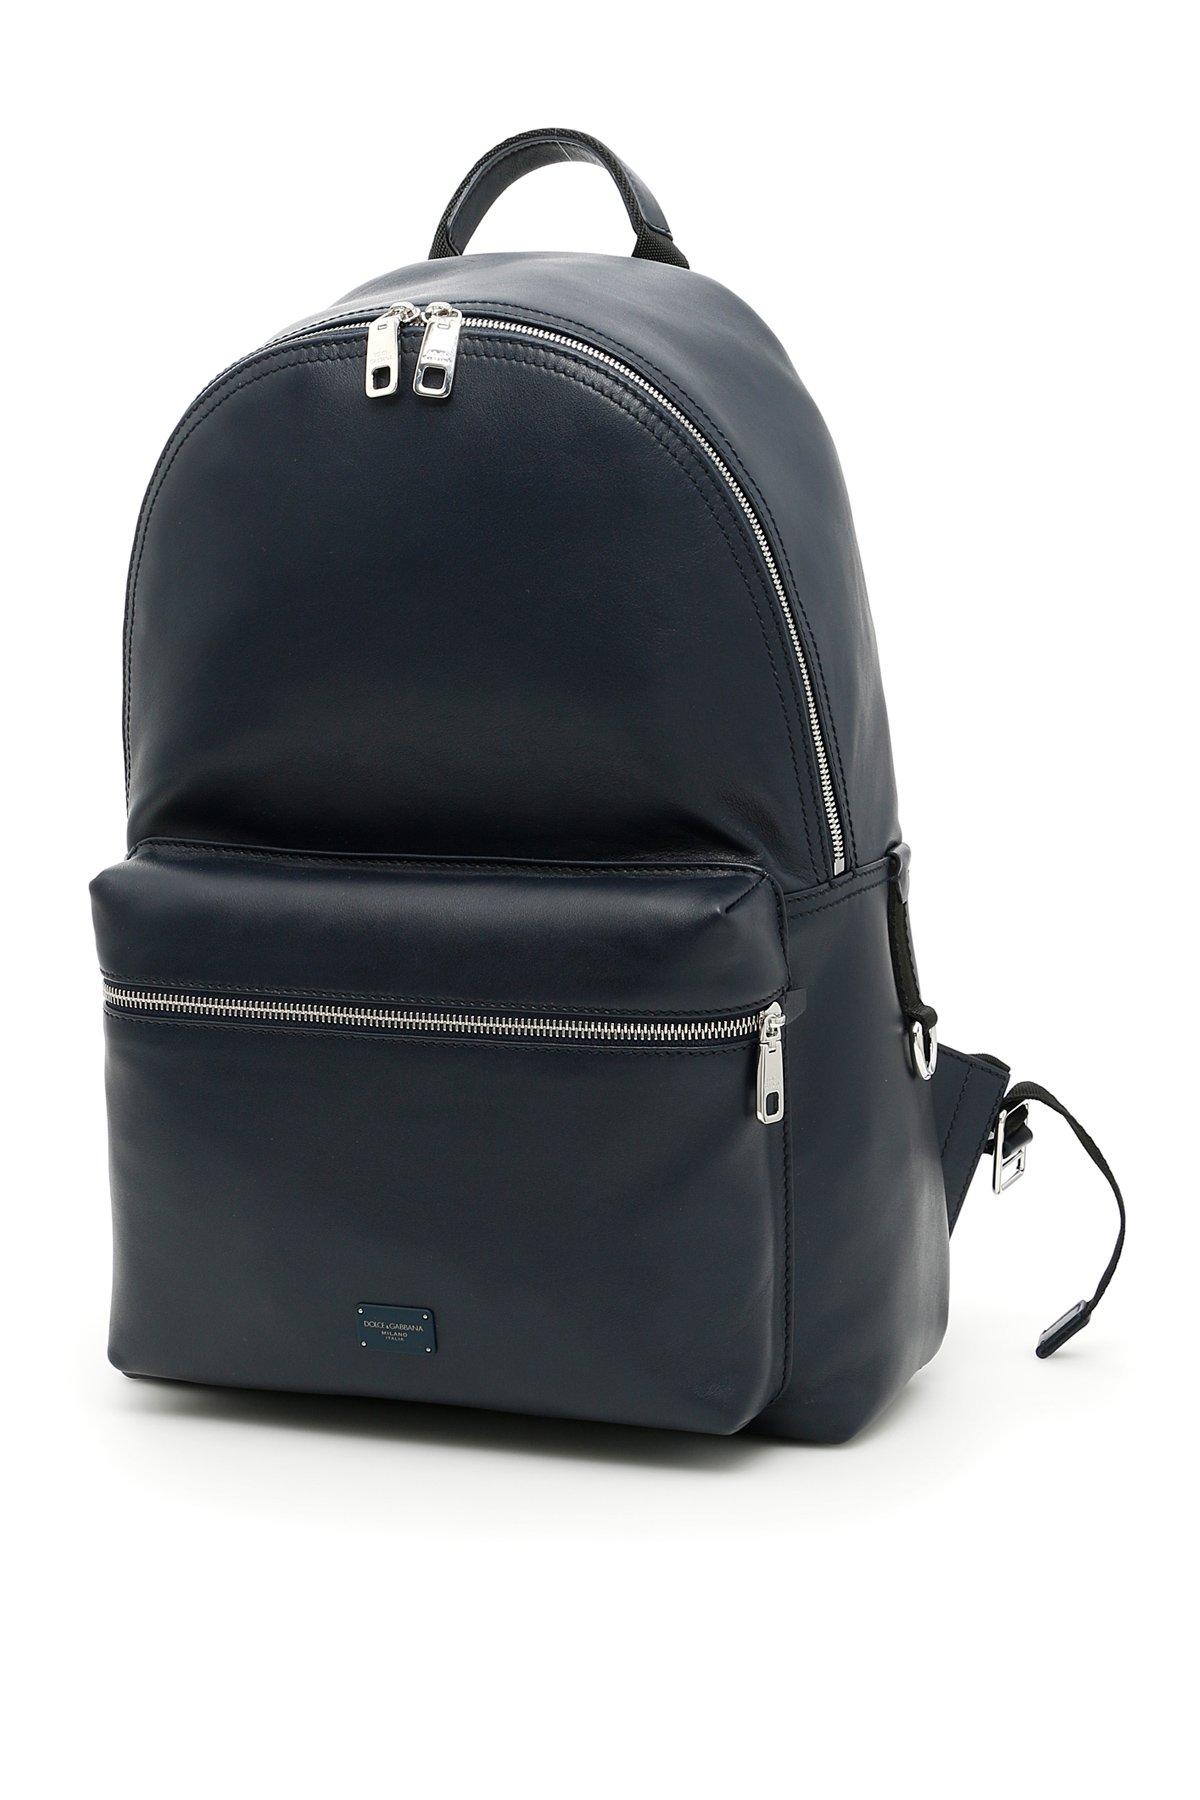 Dolce & Gabbana Mediterraneo Calfskin Backpack In Blu Scuro|blu | ModeSens